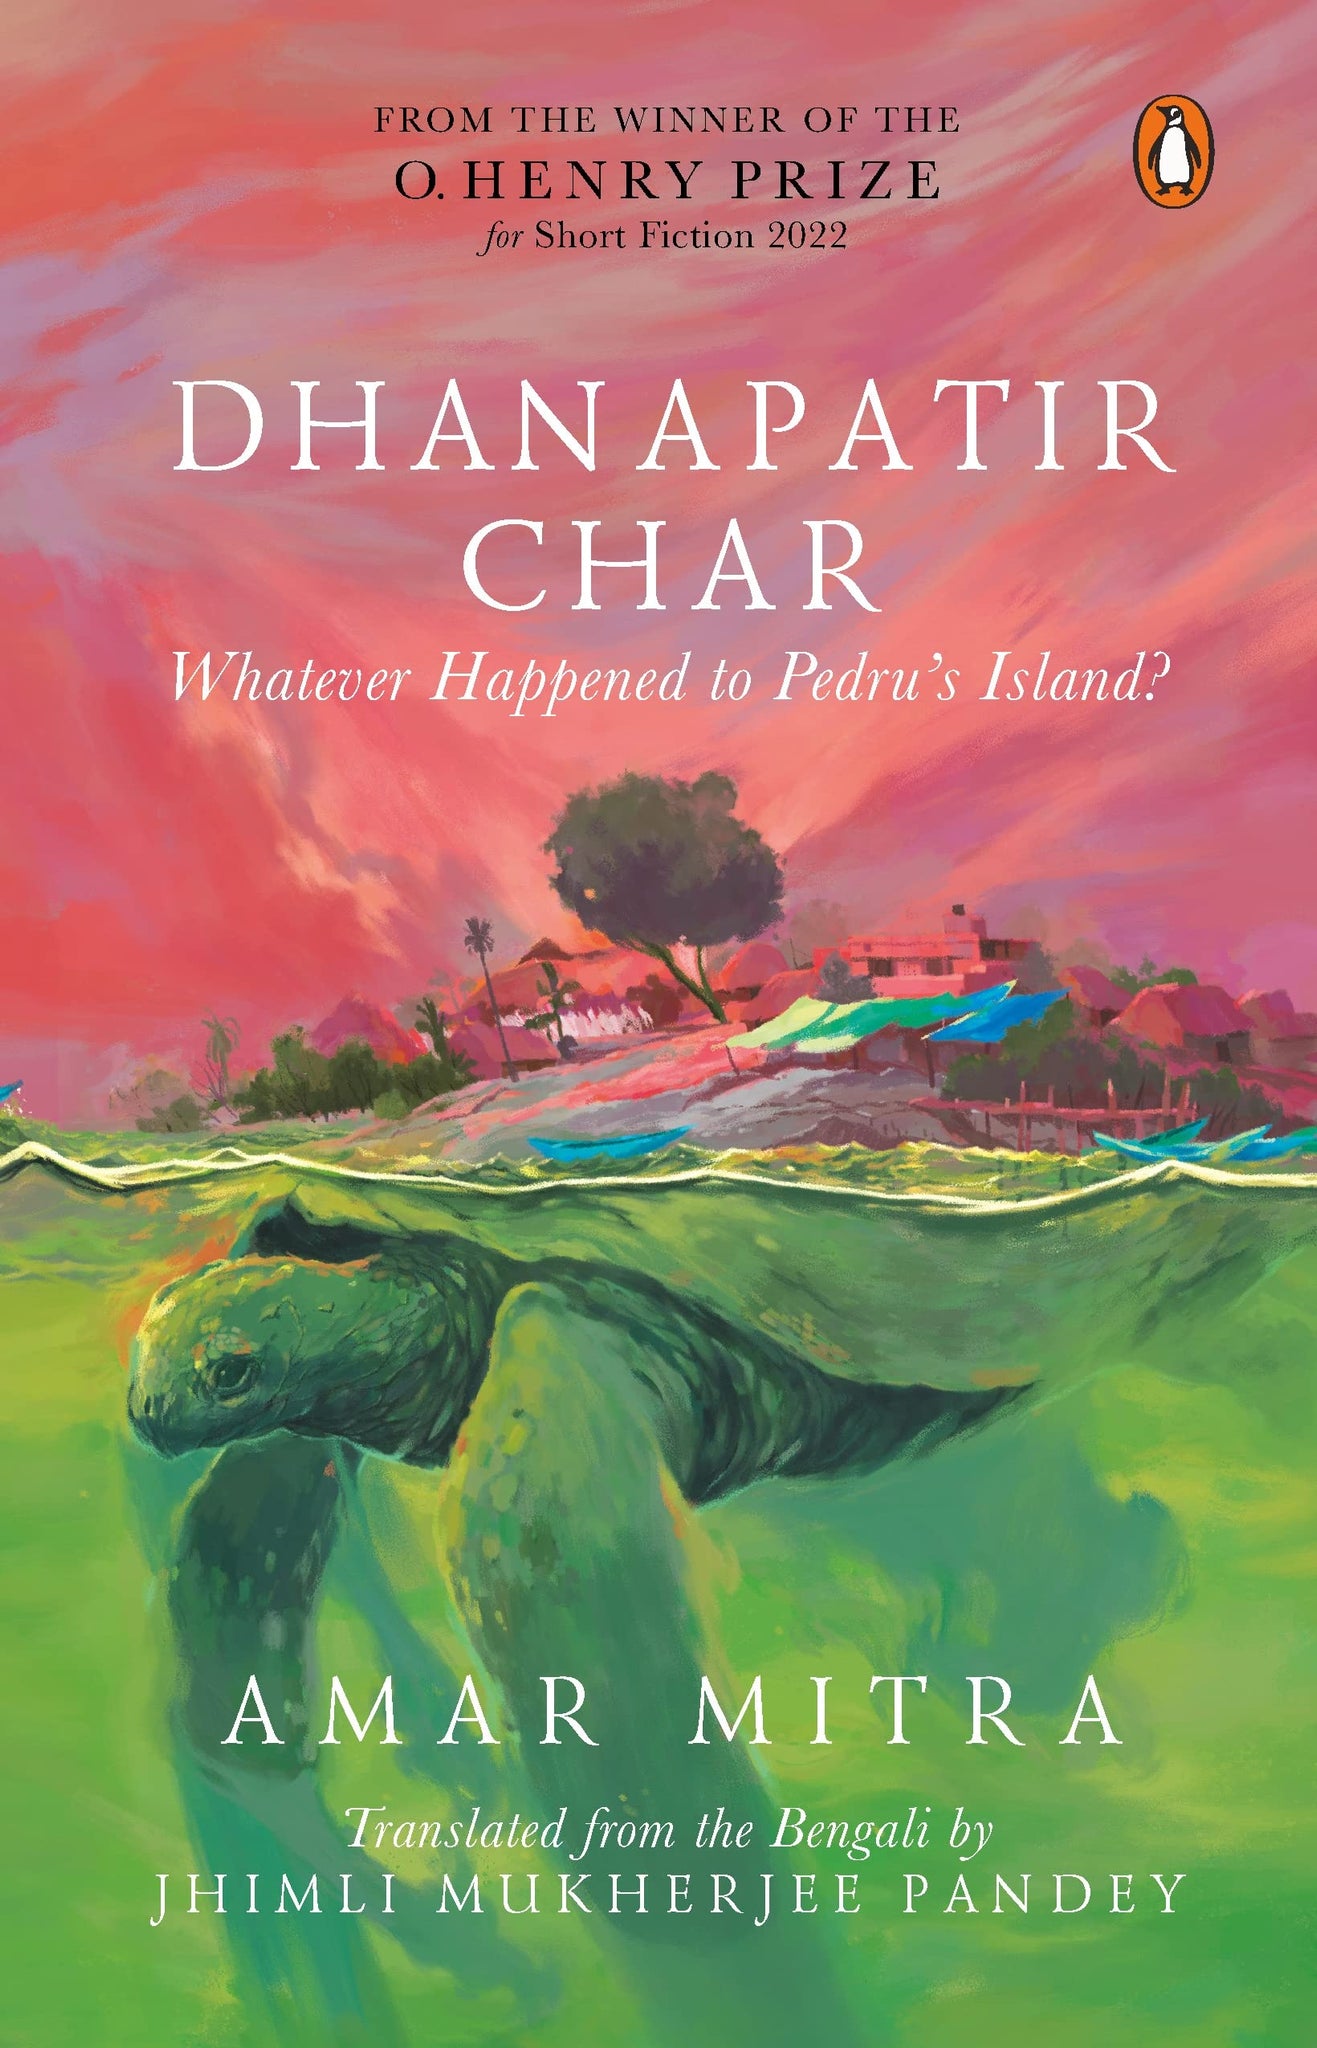 Dhanapatir Char: Whatever Happened To Pedru's Island?